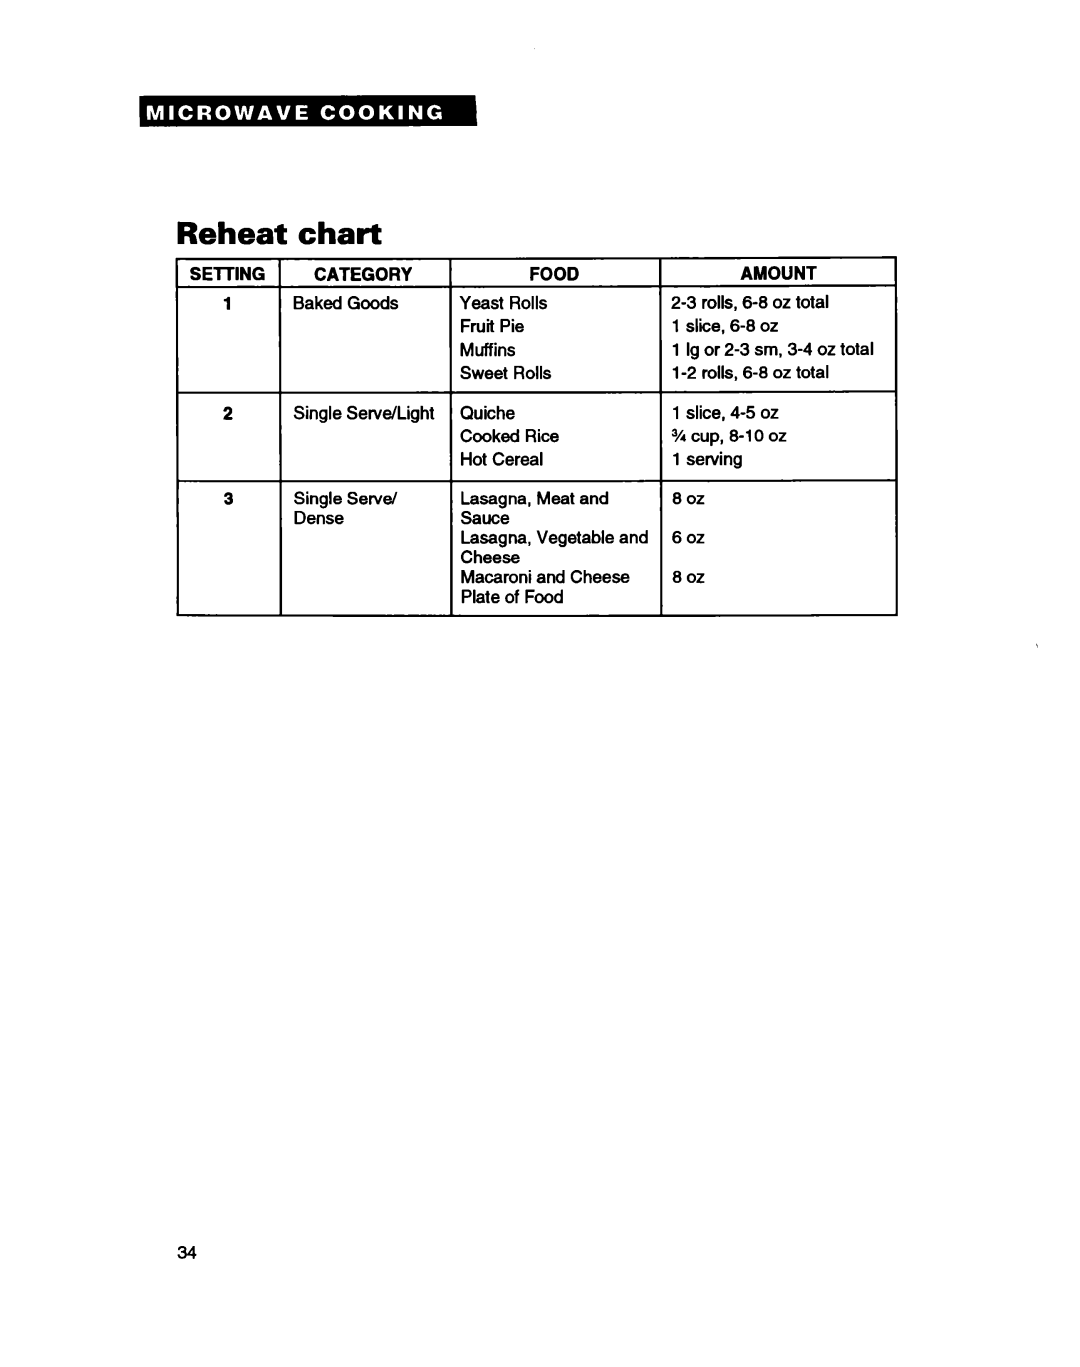 Whirlpool MC8130XA warranty chart, Category, Food, Reheat 